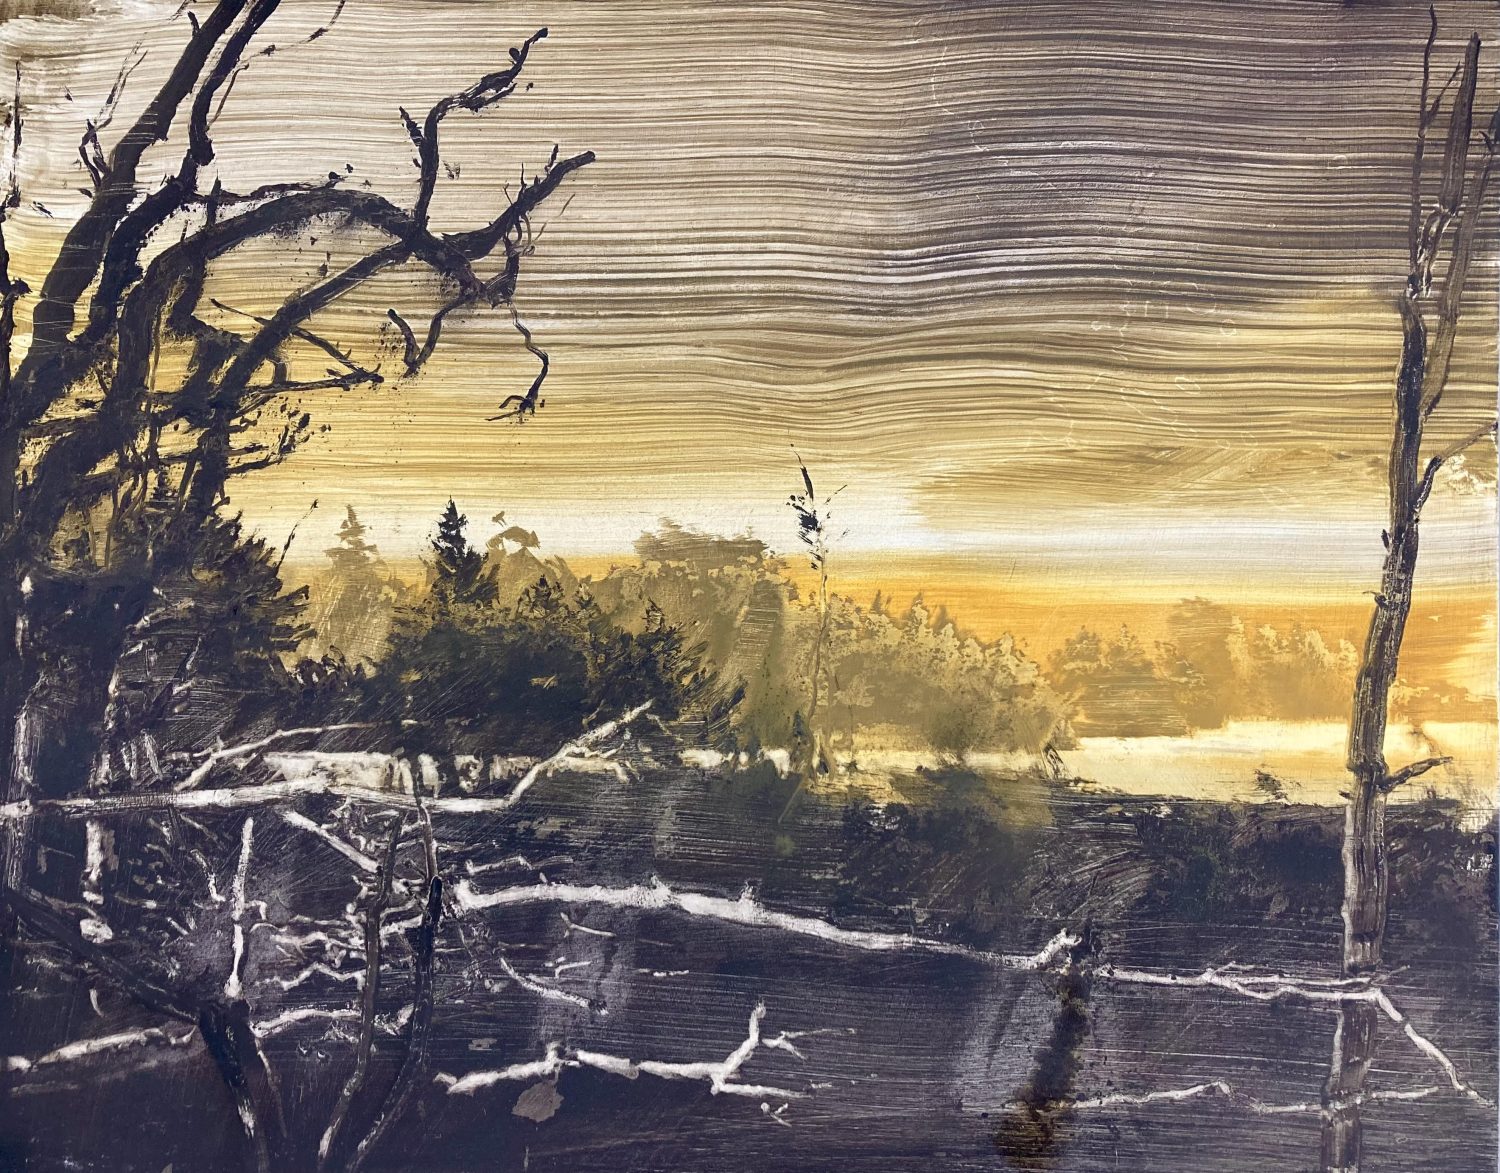 Lake edge - summer solstice by David Smith